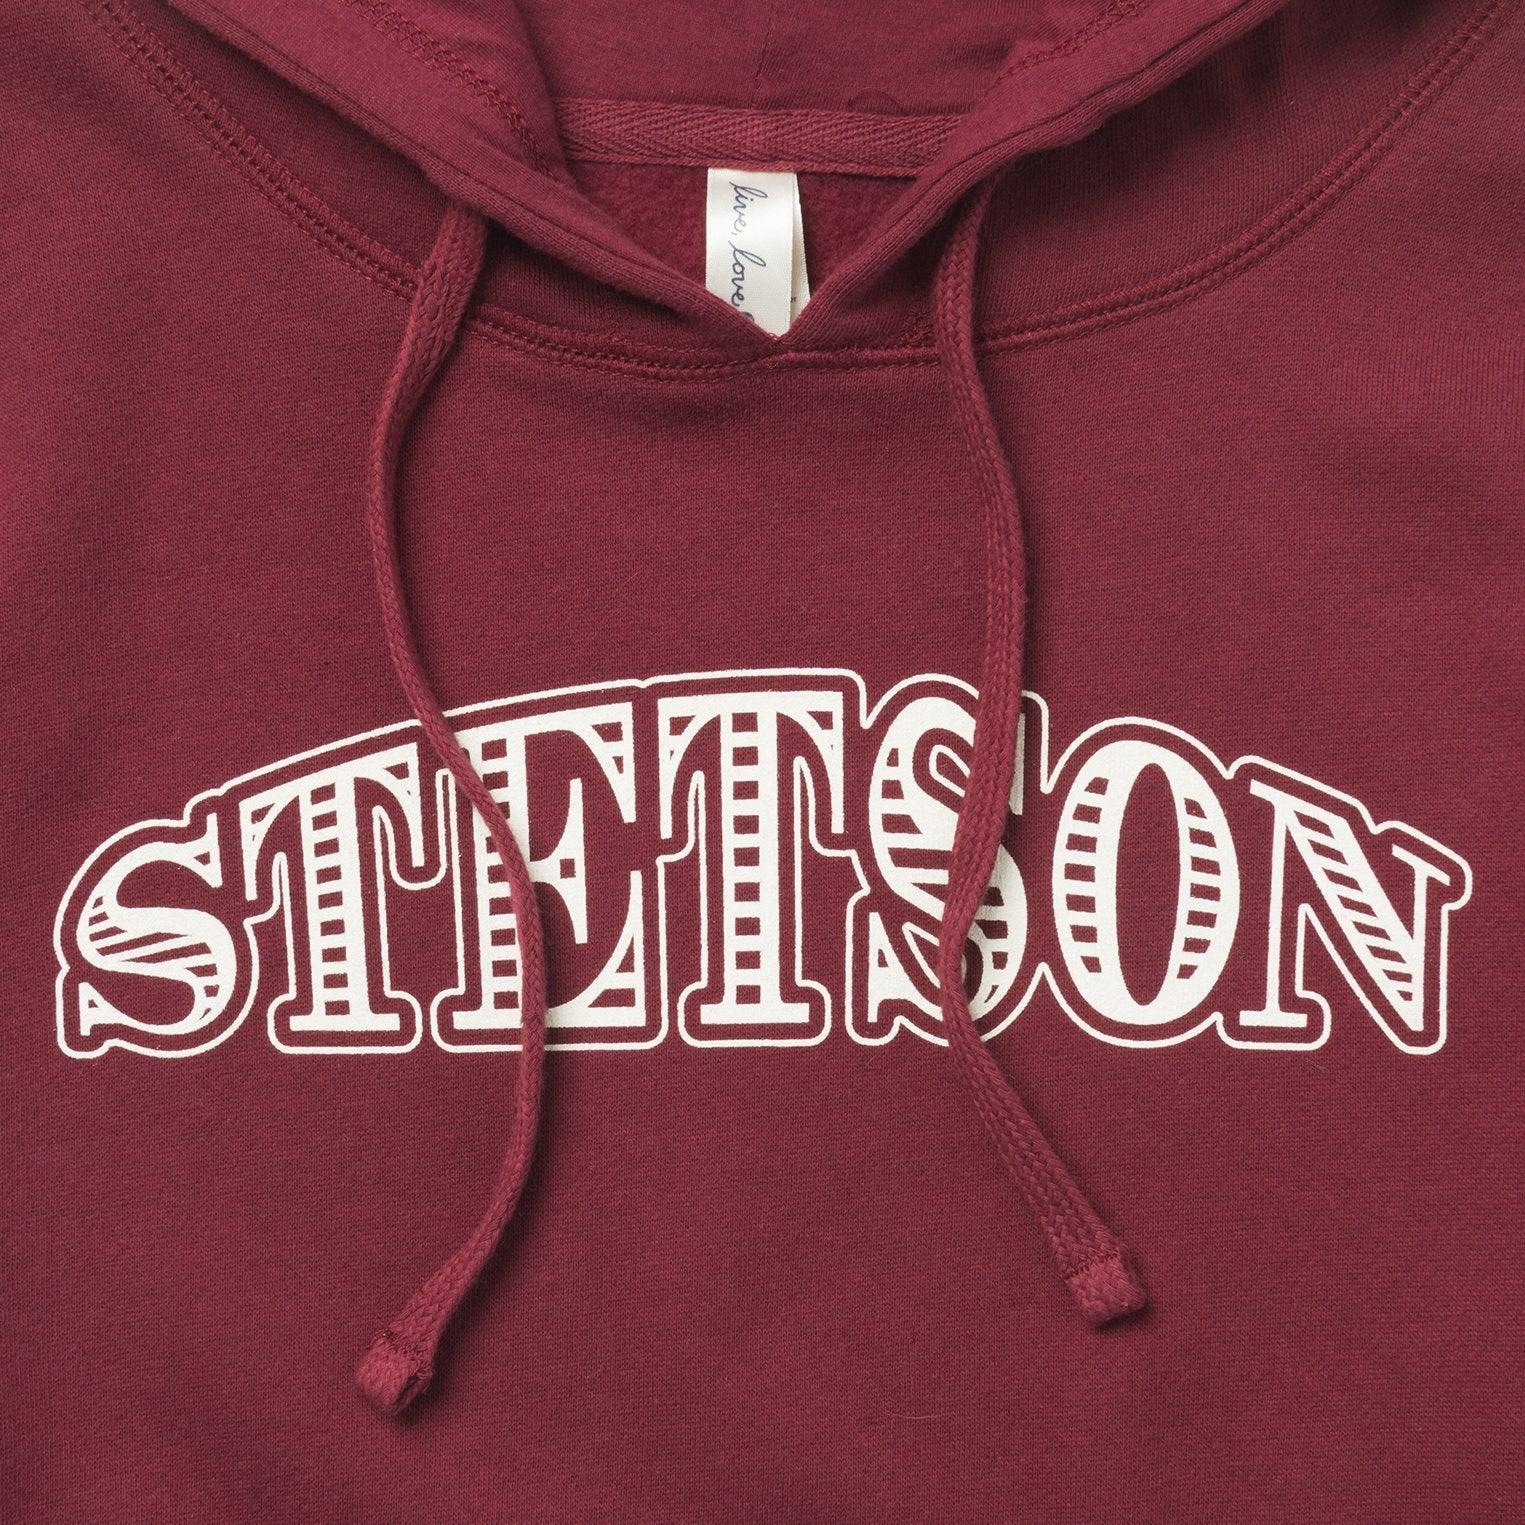 Stetson Screenprint Sweatshirt - Flyclothing LLC